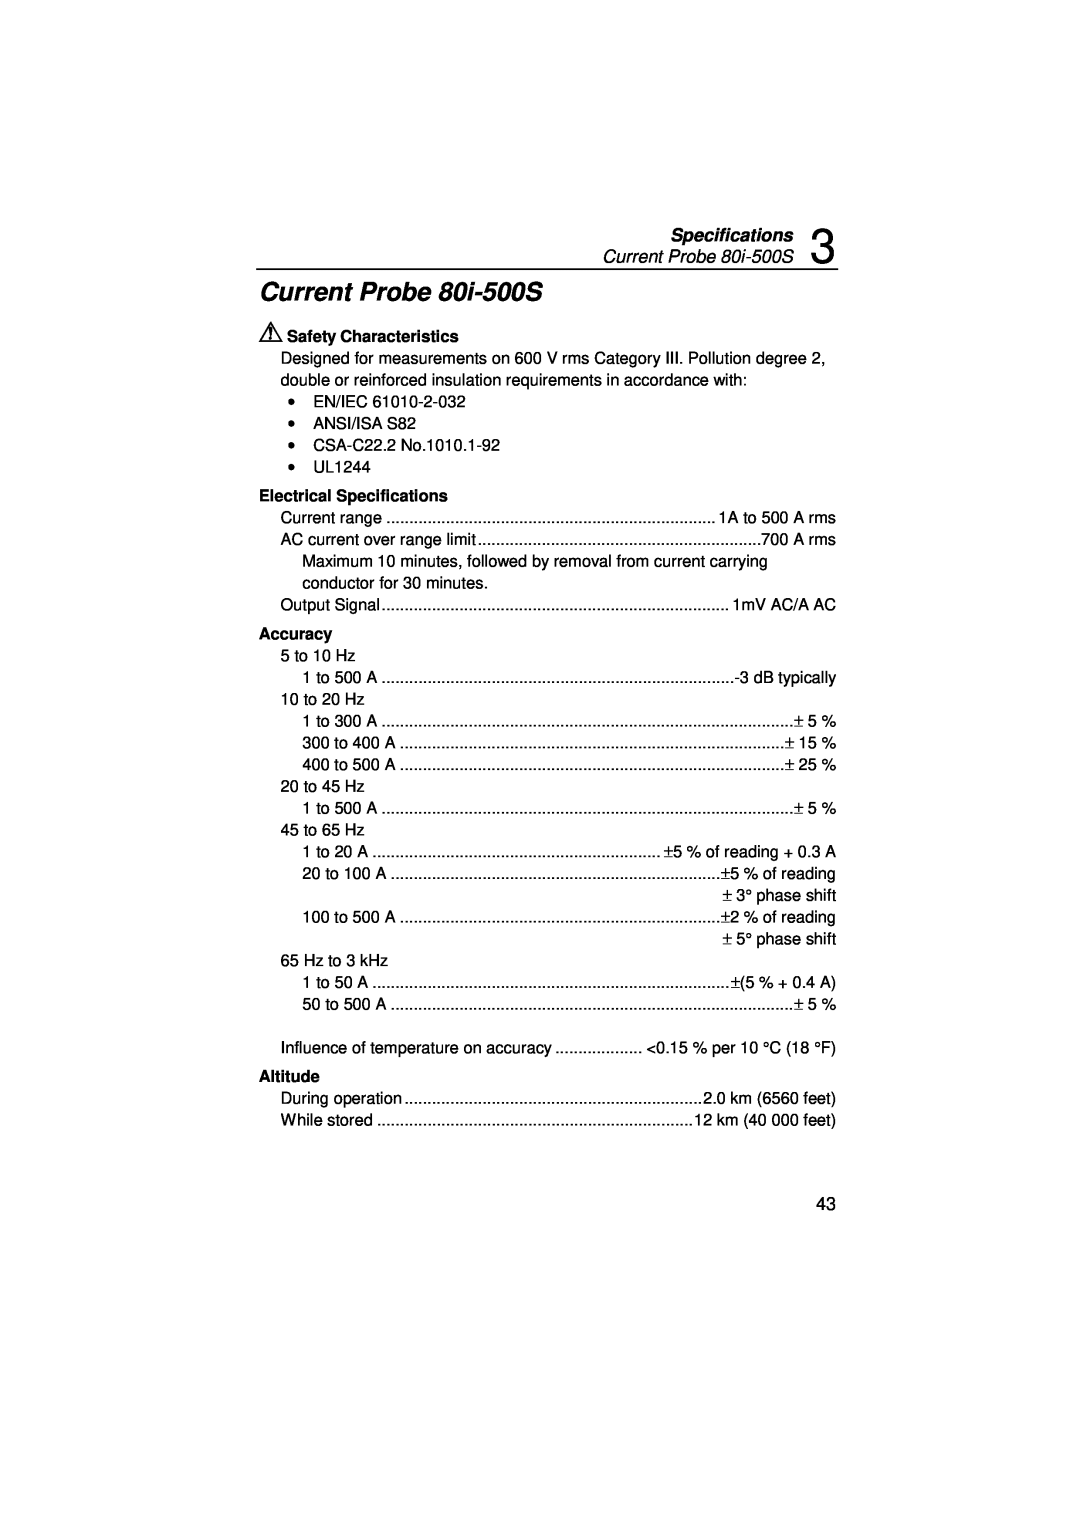 Fluke 43B user manual Current Probe 80i-500S, Specifications 